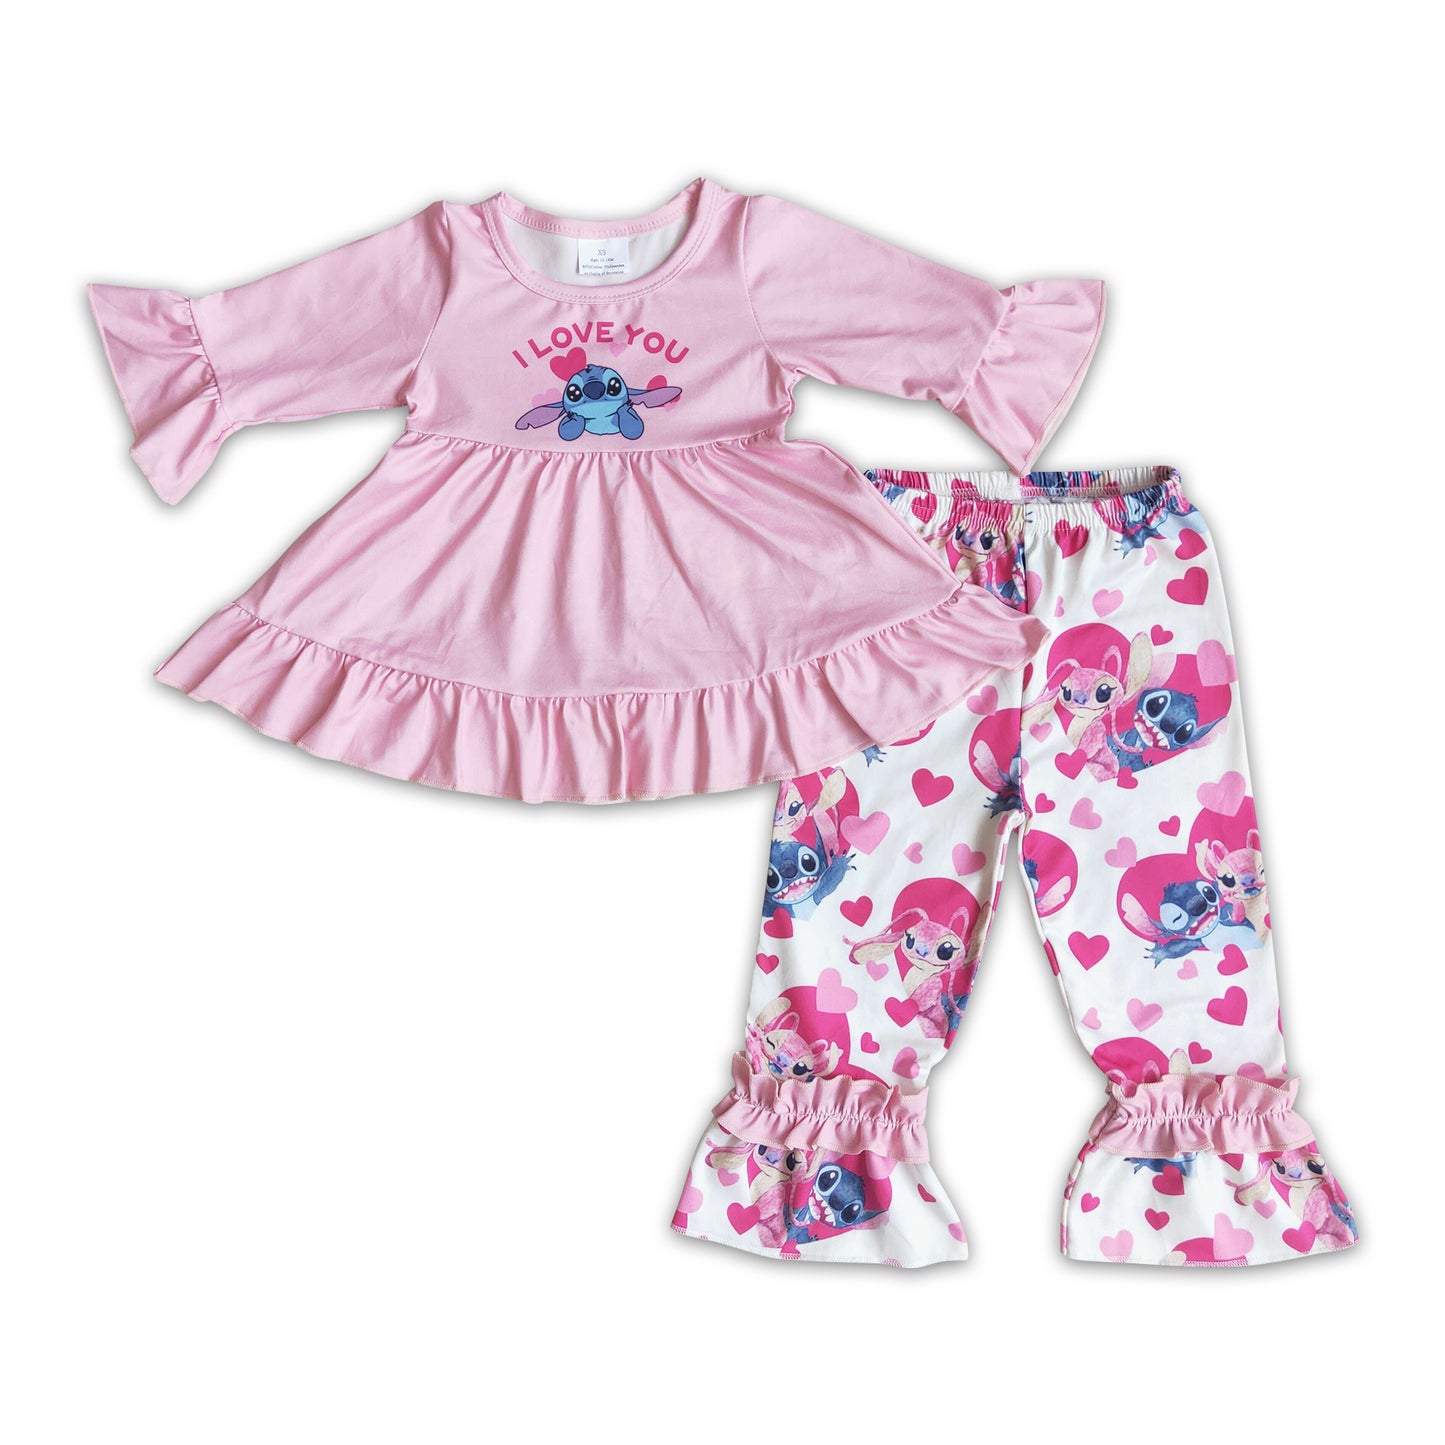 I love you pink 3/4 sleeves tunic koala ruffle pants cute girls boutique clothing